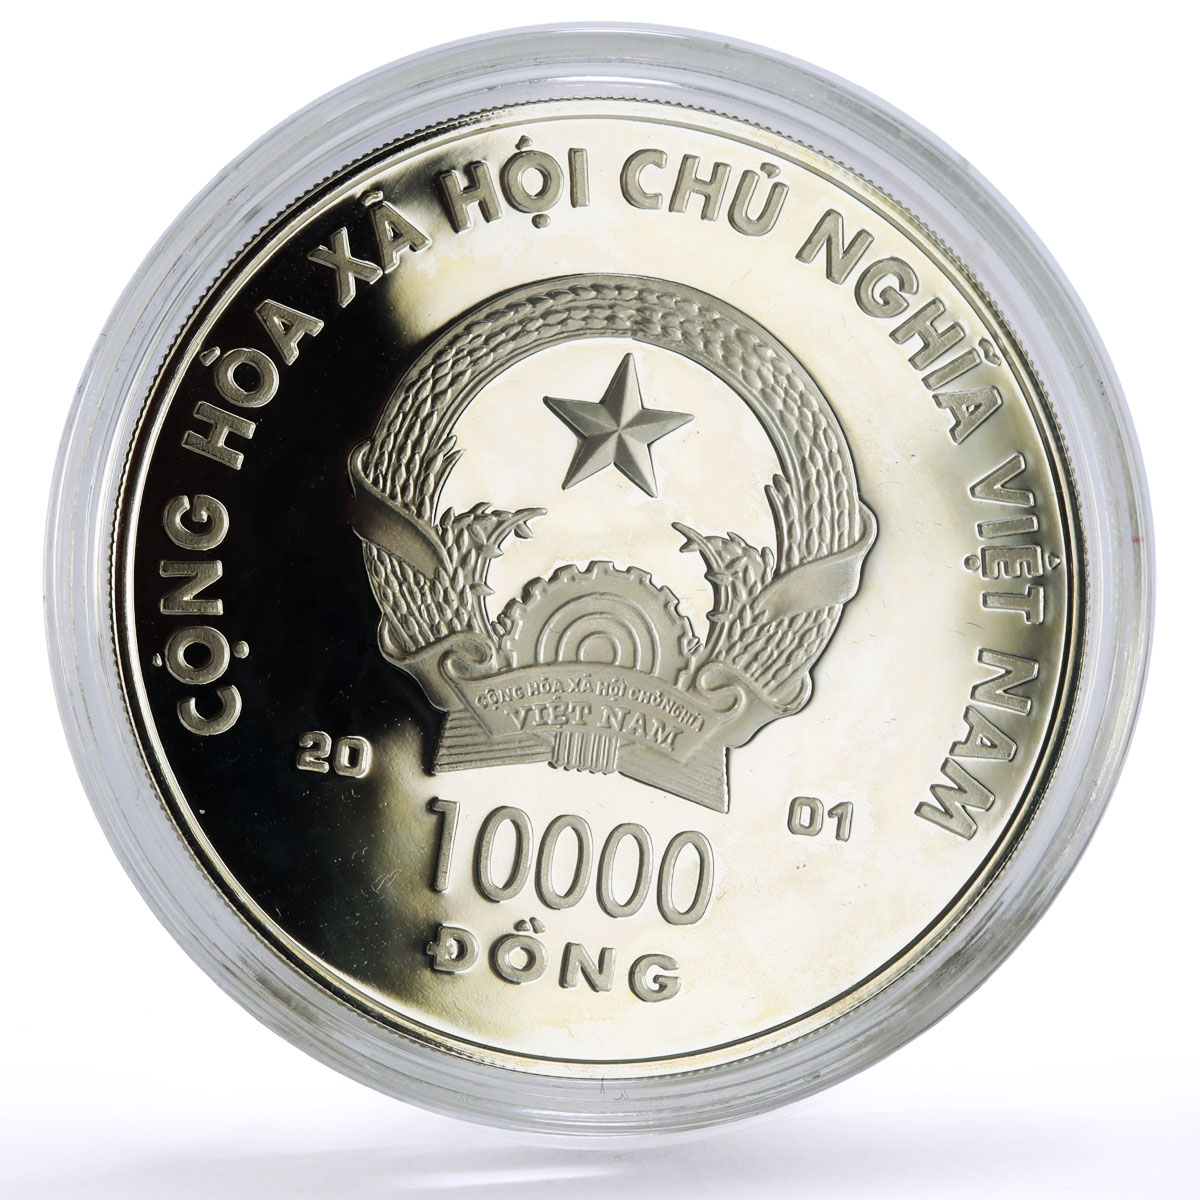 Vietnam set of 3 coins Lunar Calendar Year of the Snake proof silver coins 2001